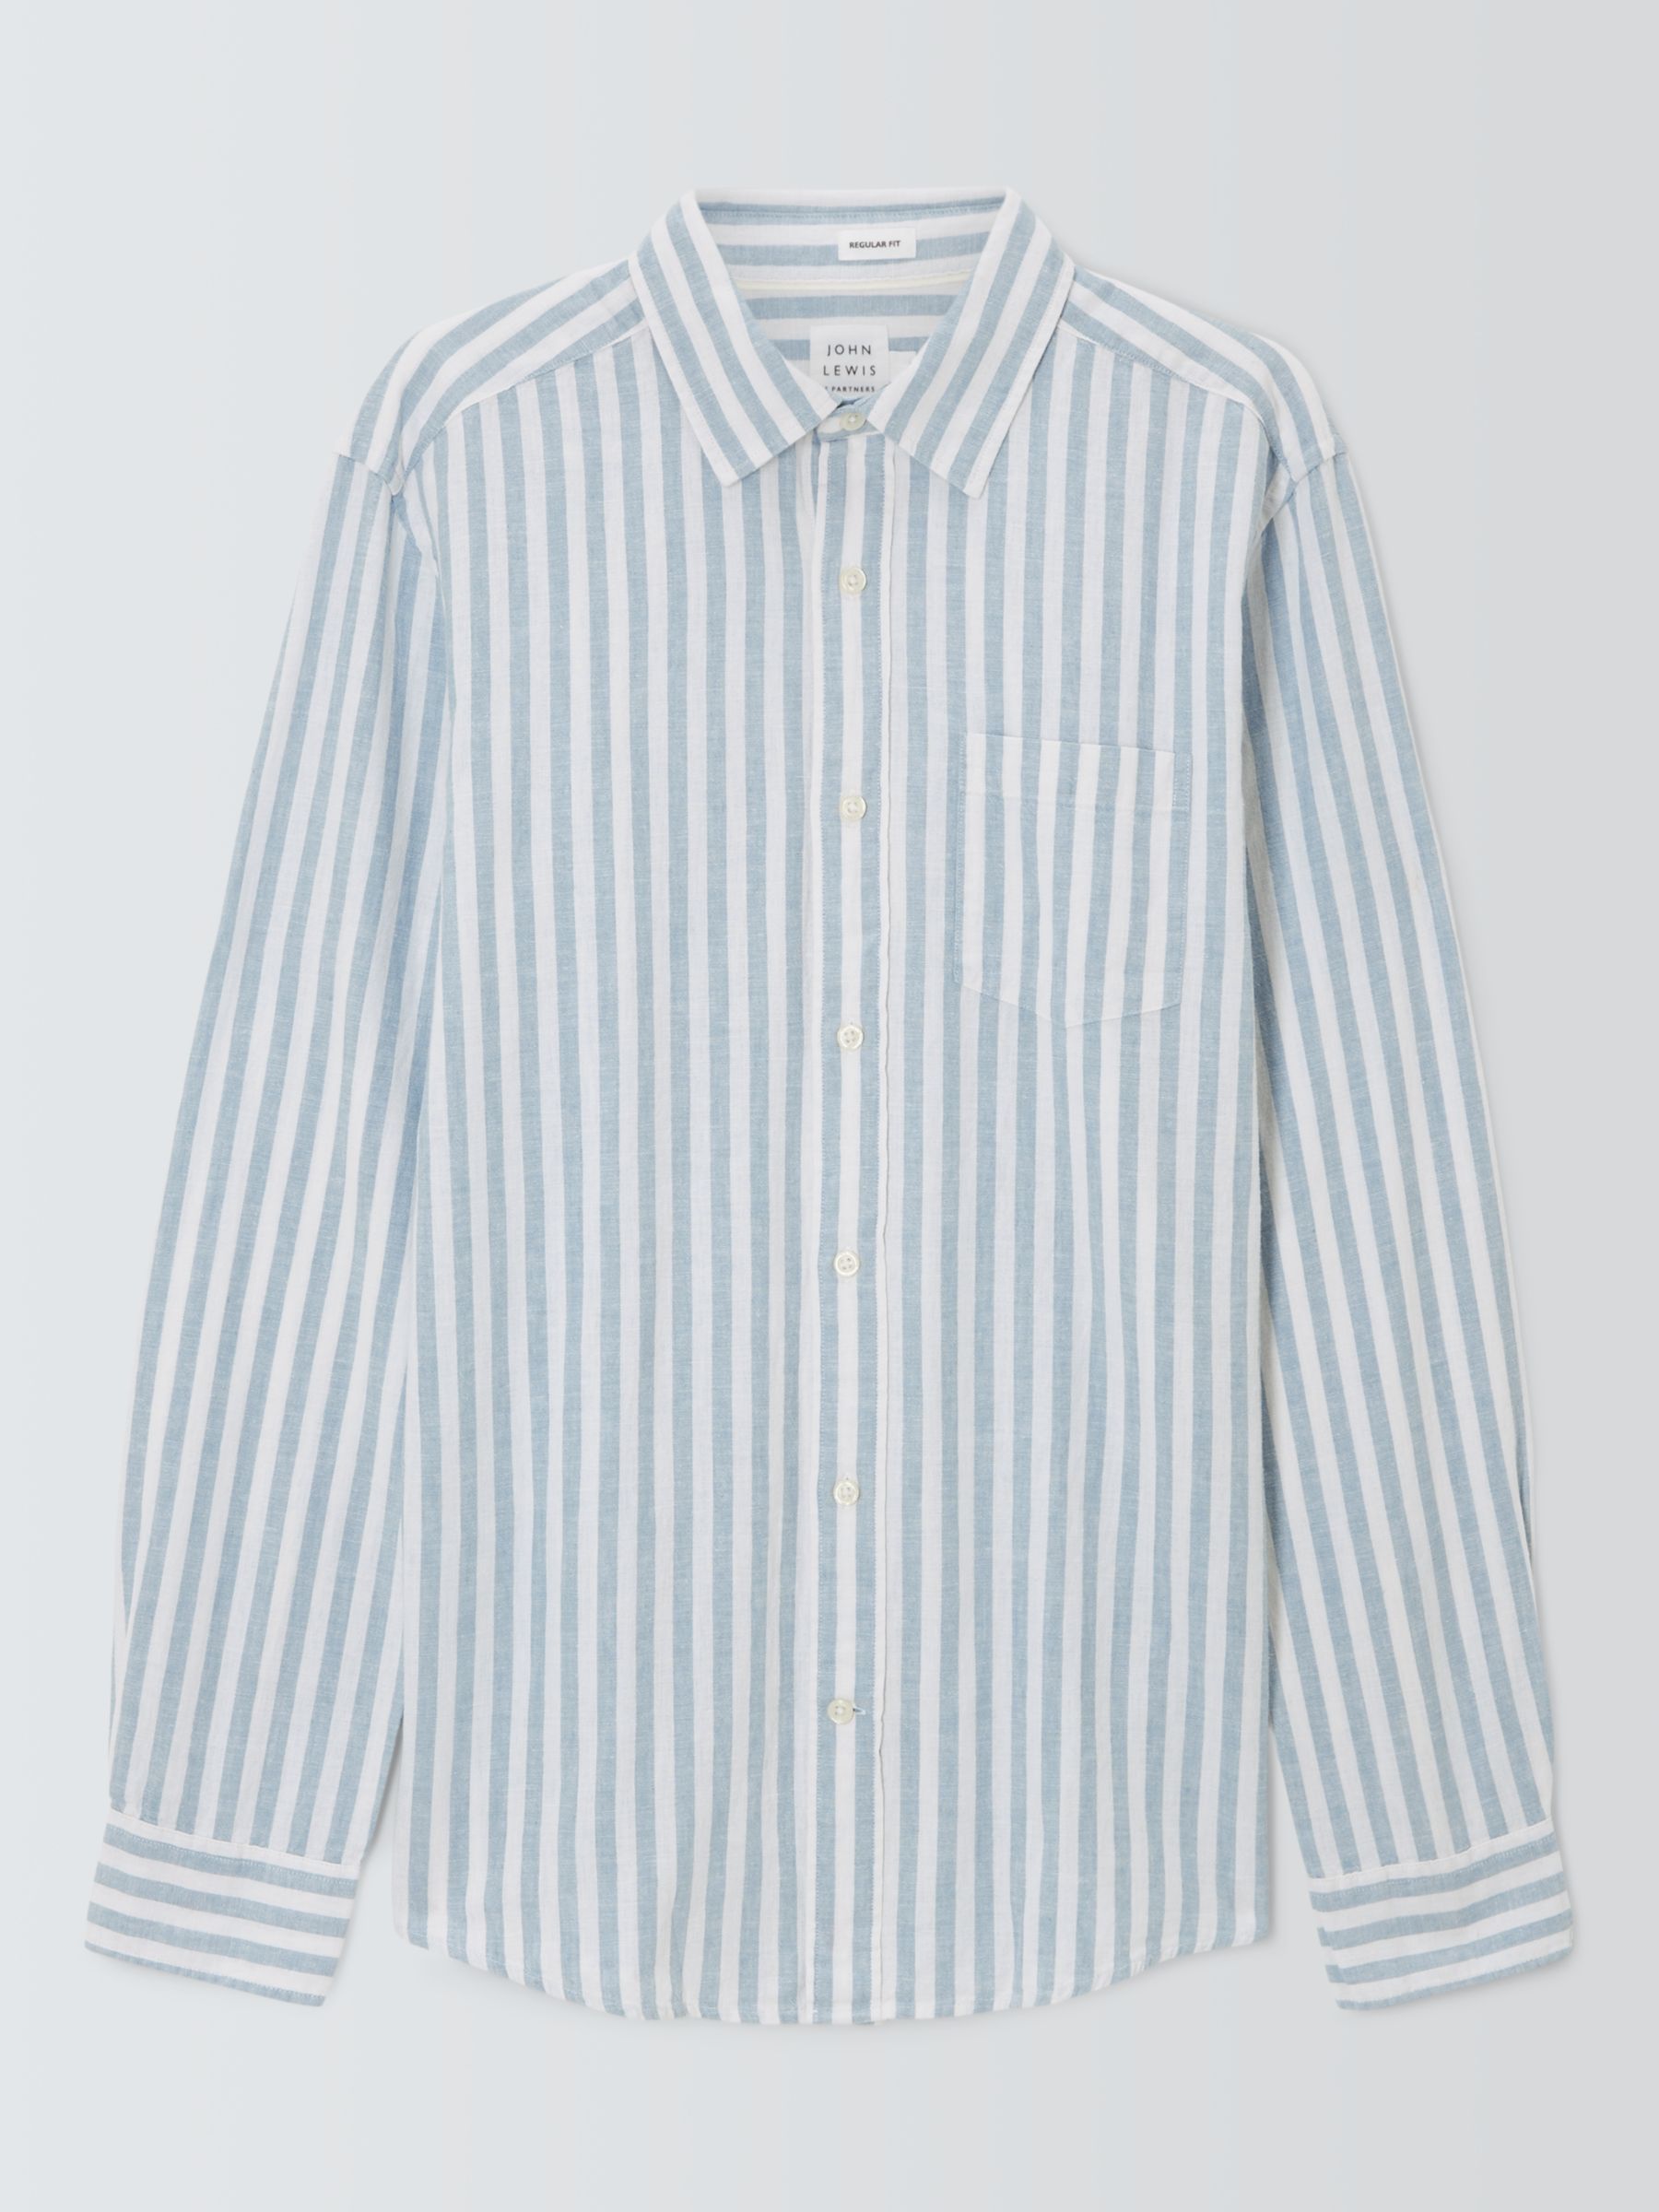 John Lewis Linen Blend Stripe Long Sleeve Shirt, Blue at John Lewis ...